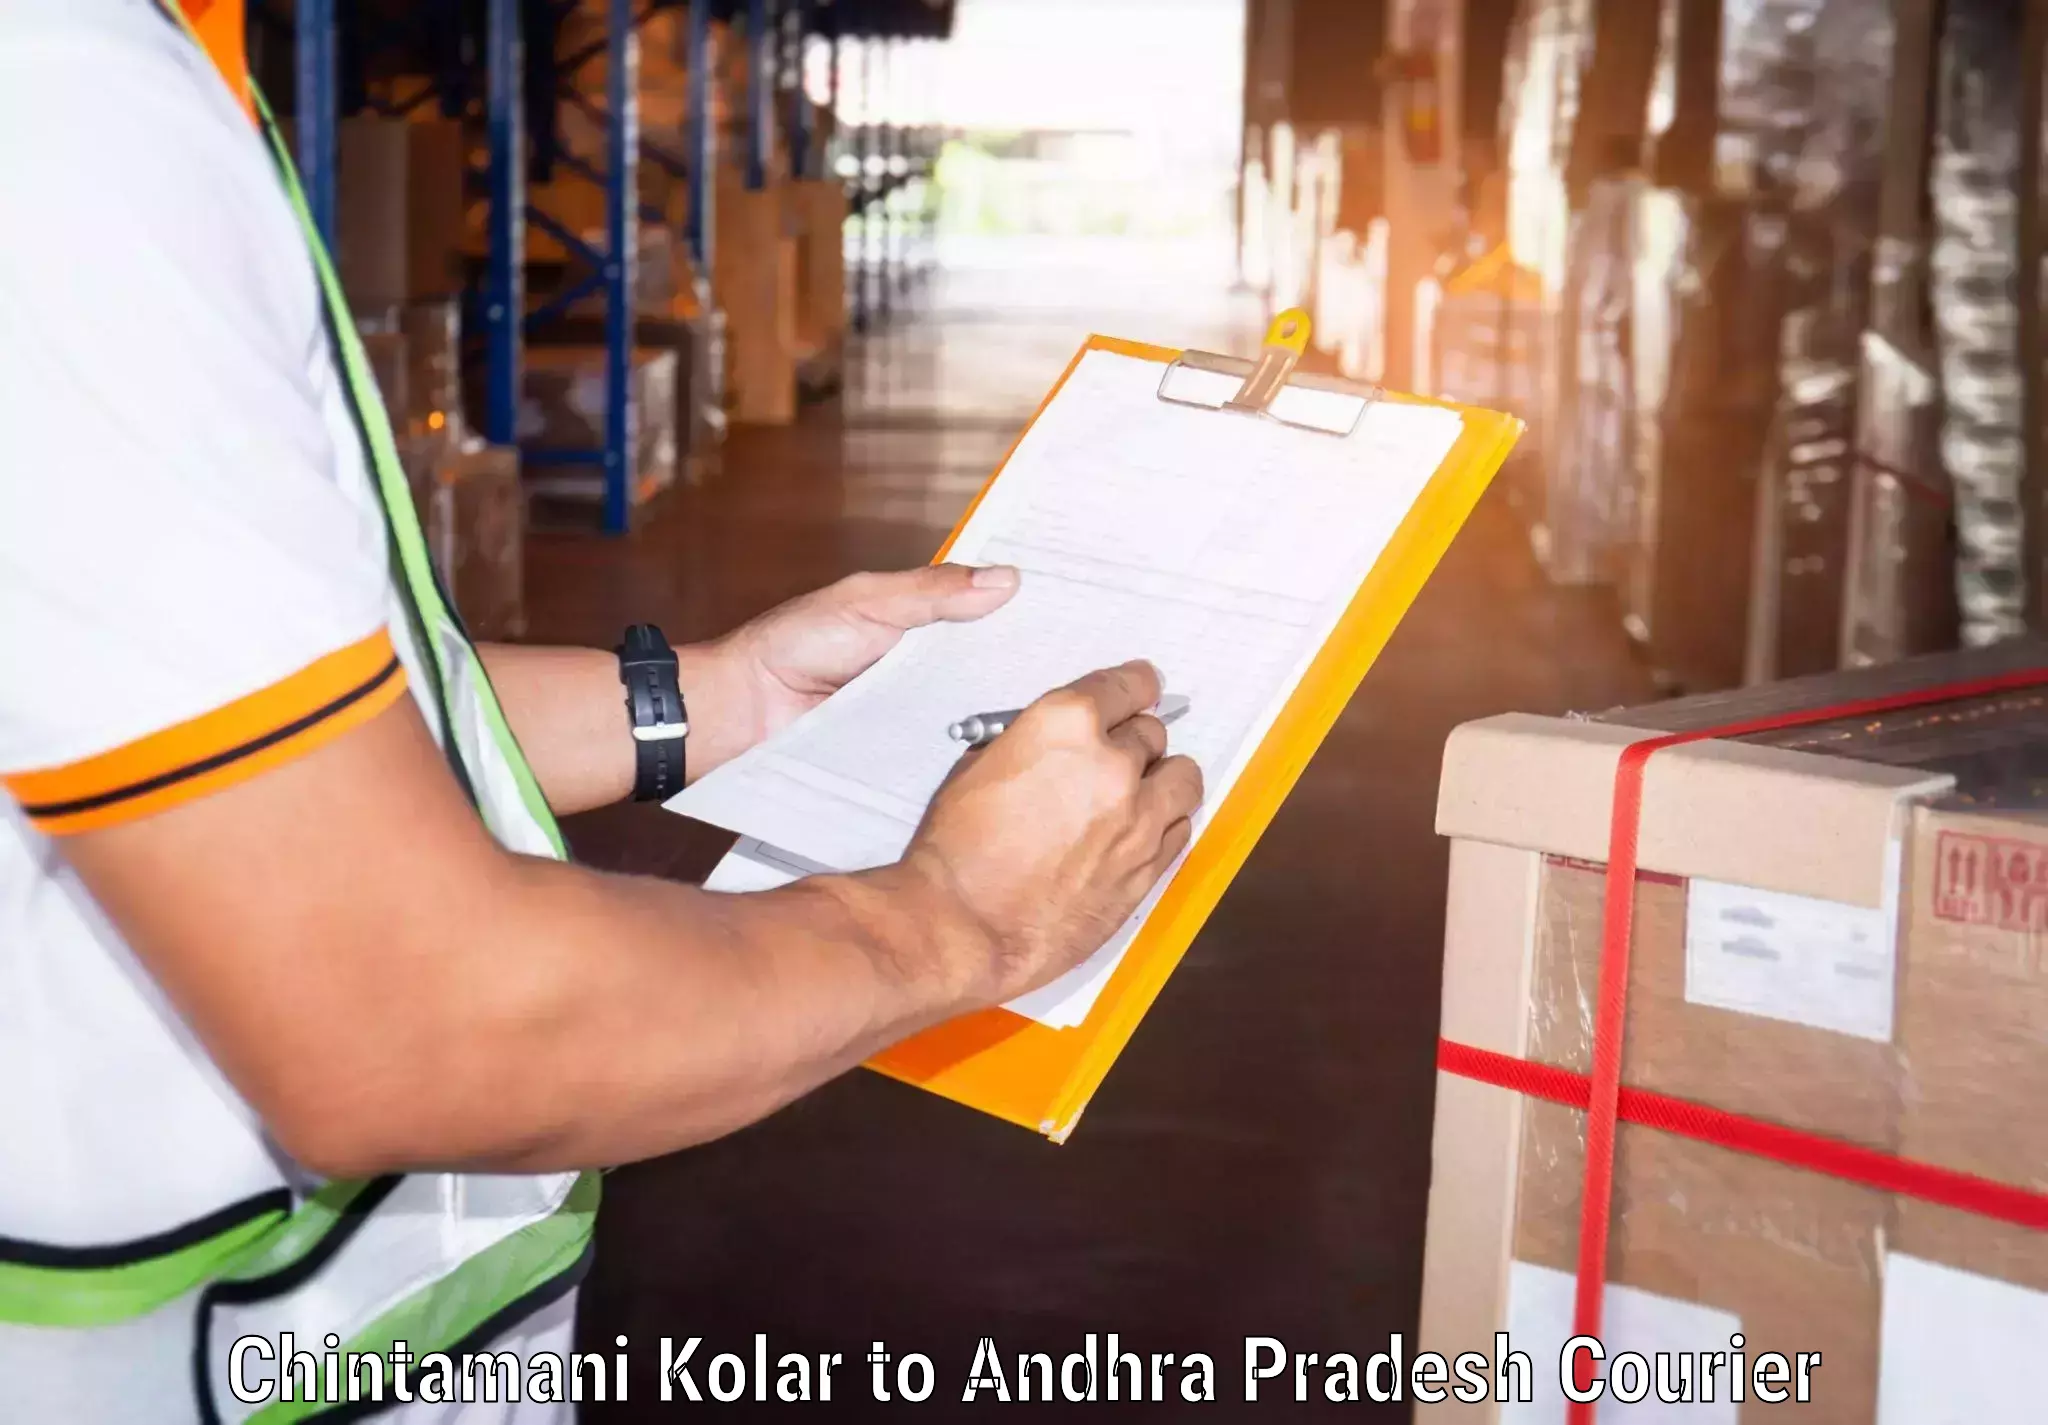 Global courier networks Chintamani Kolar to Kathipudi